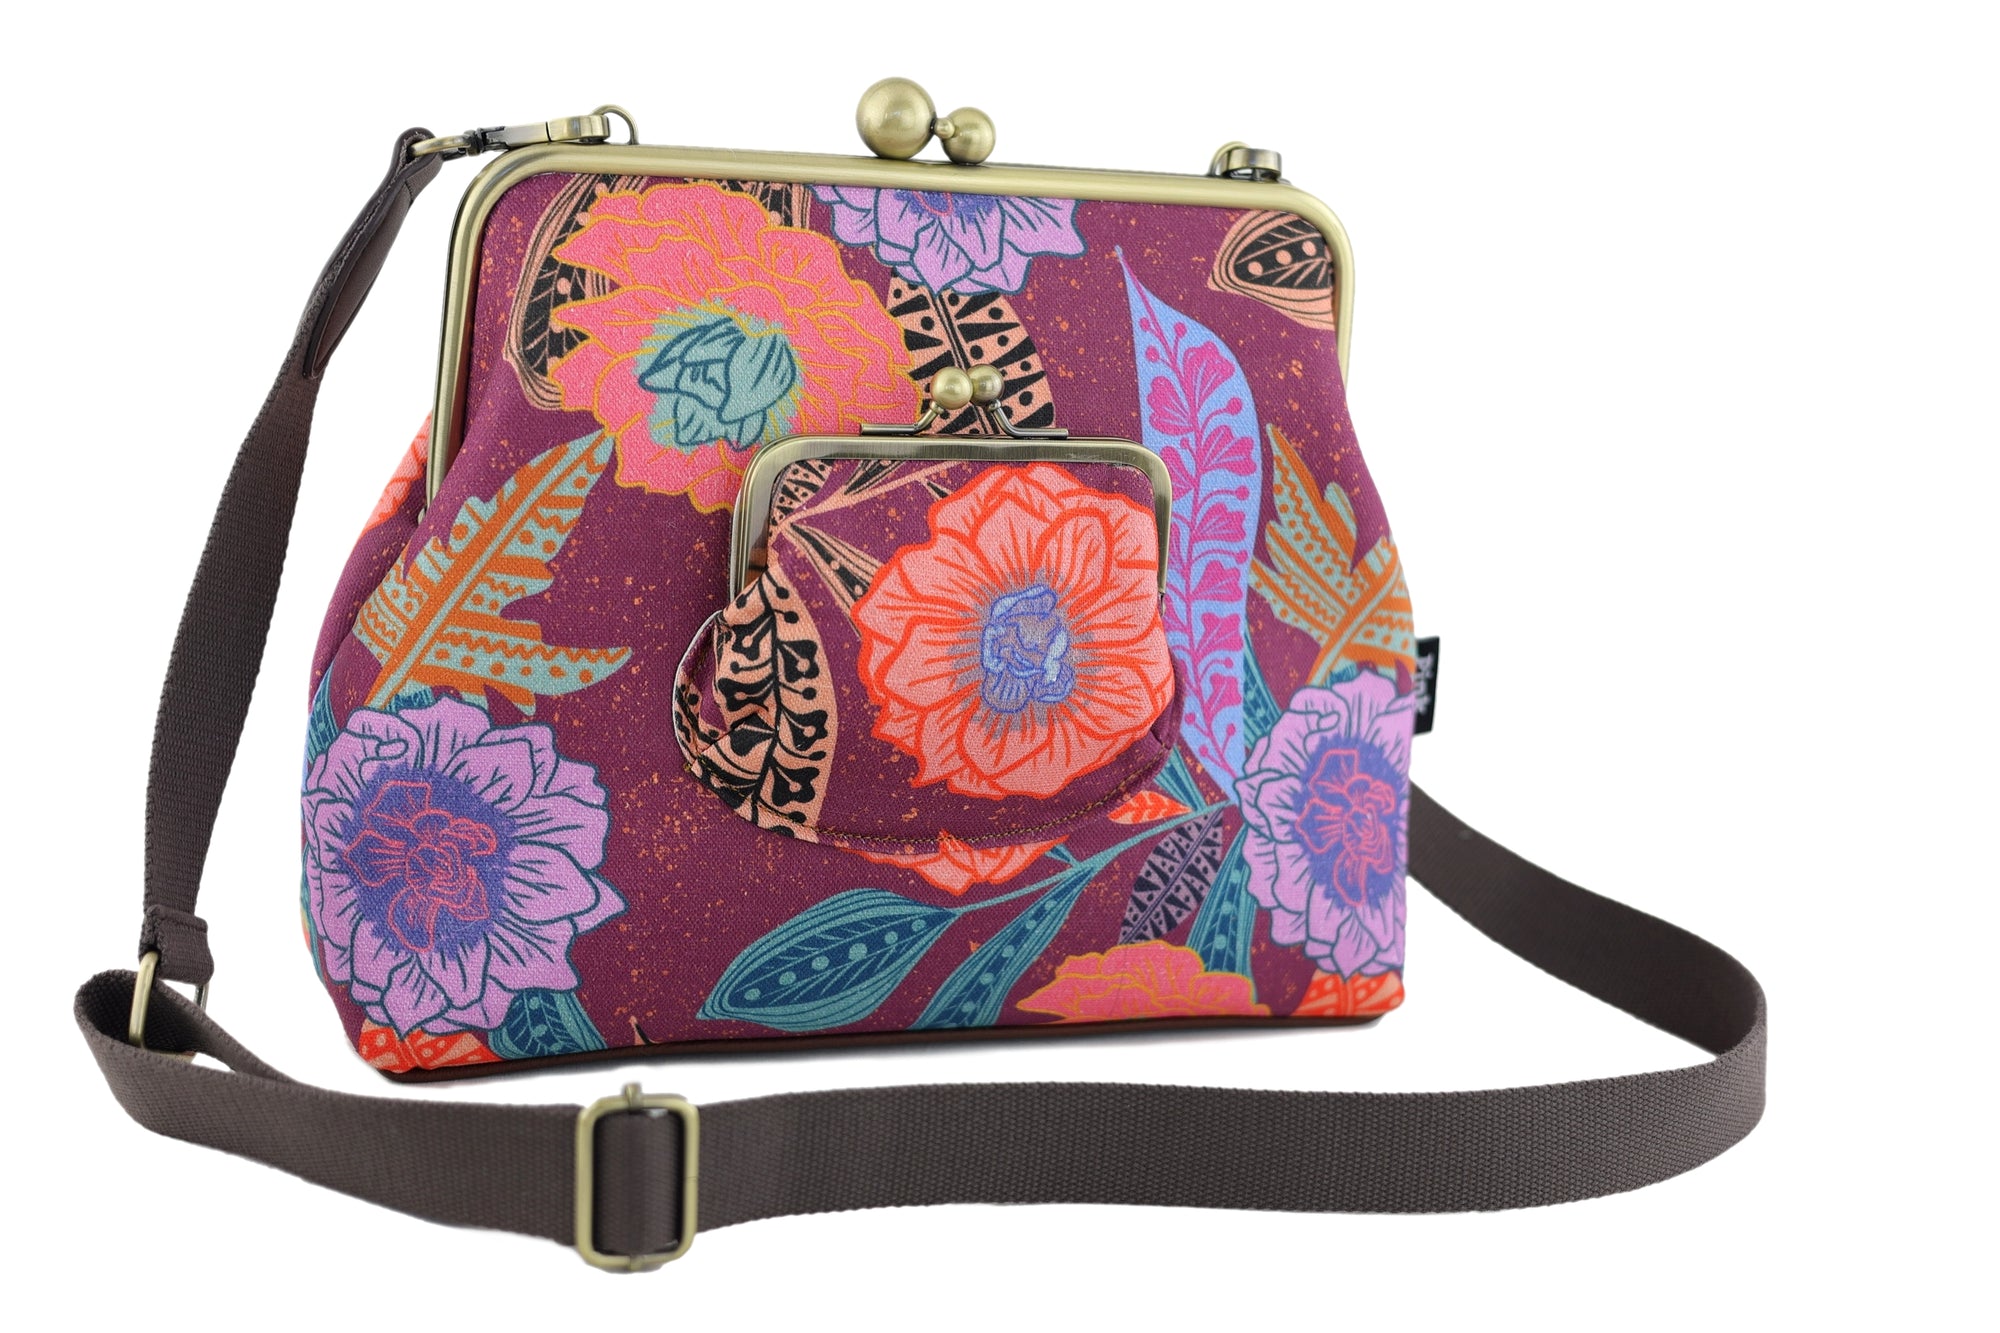 Geranium Flowers Handbag and Crossbody 2 Way Bag | PINK OASIS